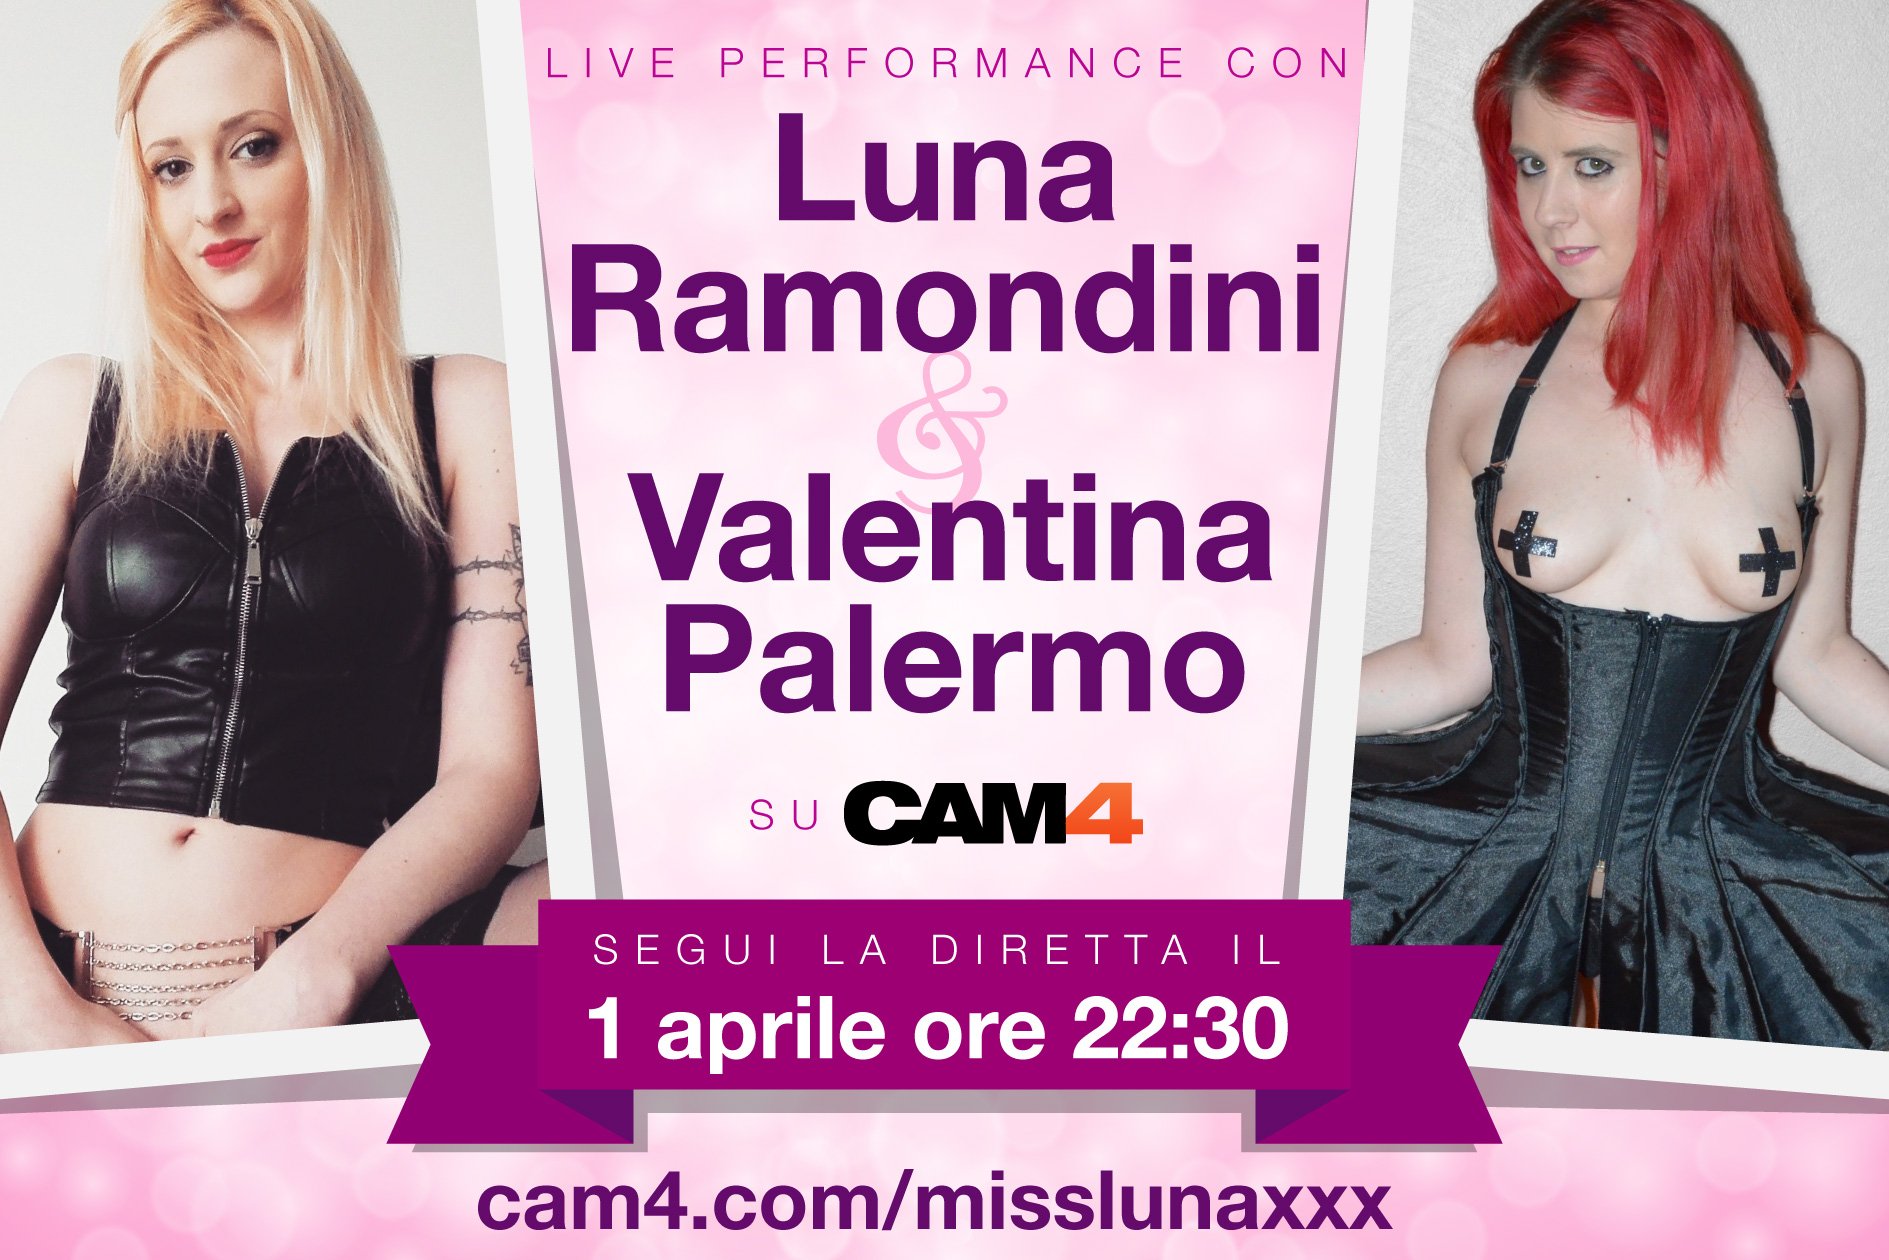 Luna Ramondini & Valentina Palermo Special Show – 1 Aprile in cam live su CAM4!